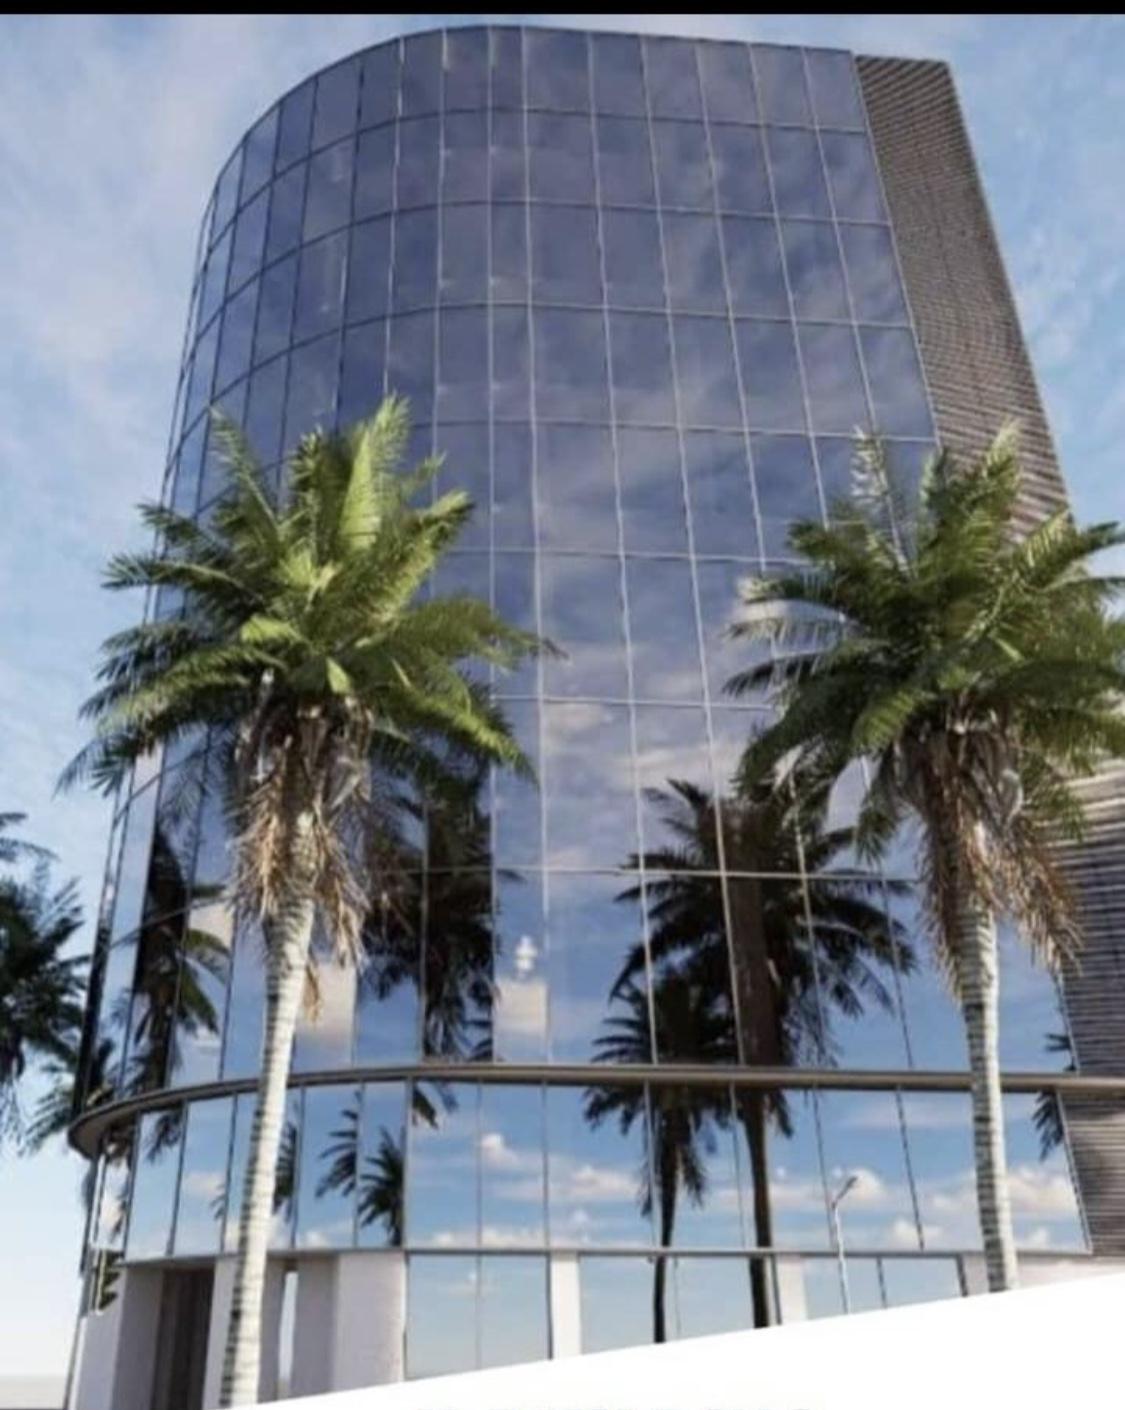 Vente d'un Immeuble à 12.000.000.000 FCFA  : Abidjan-Plateau (Plateau )